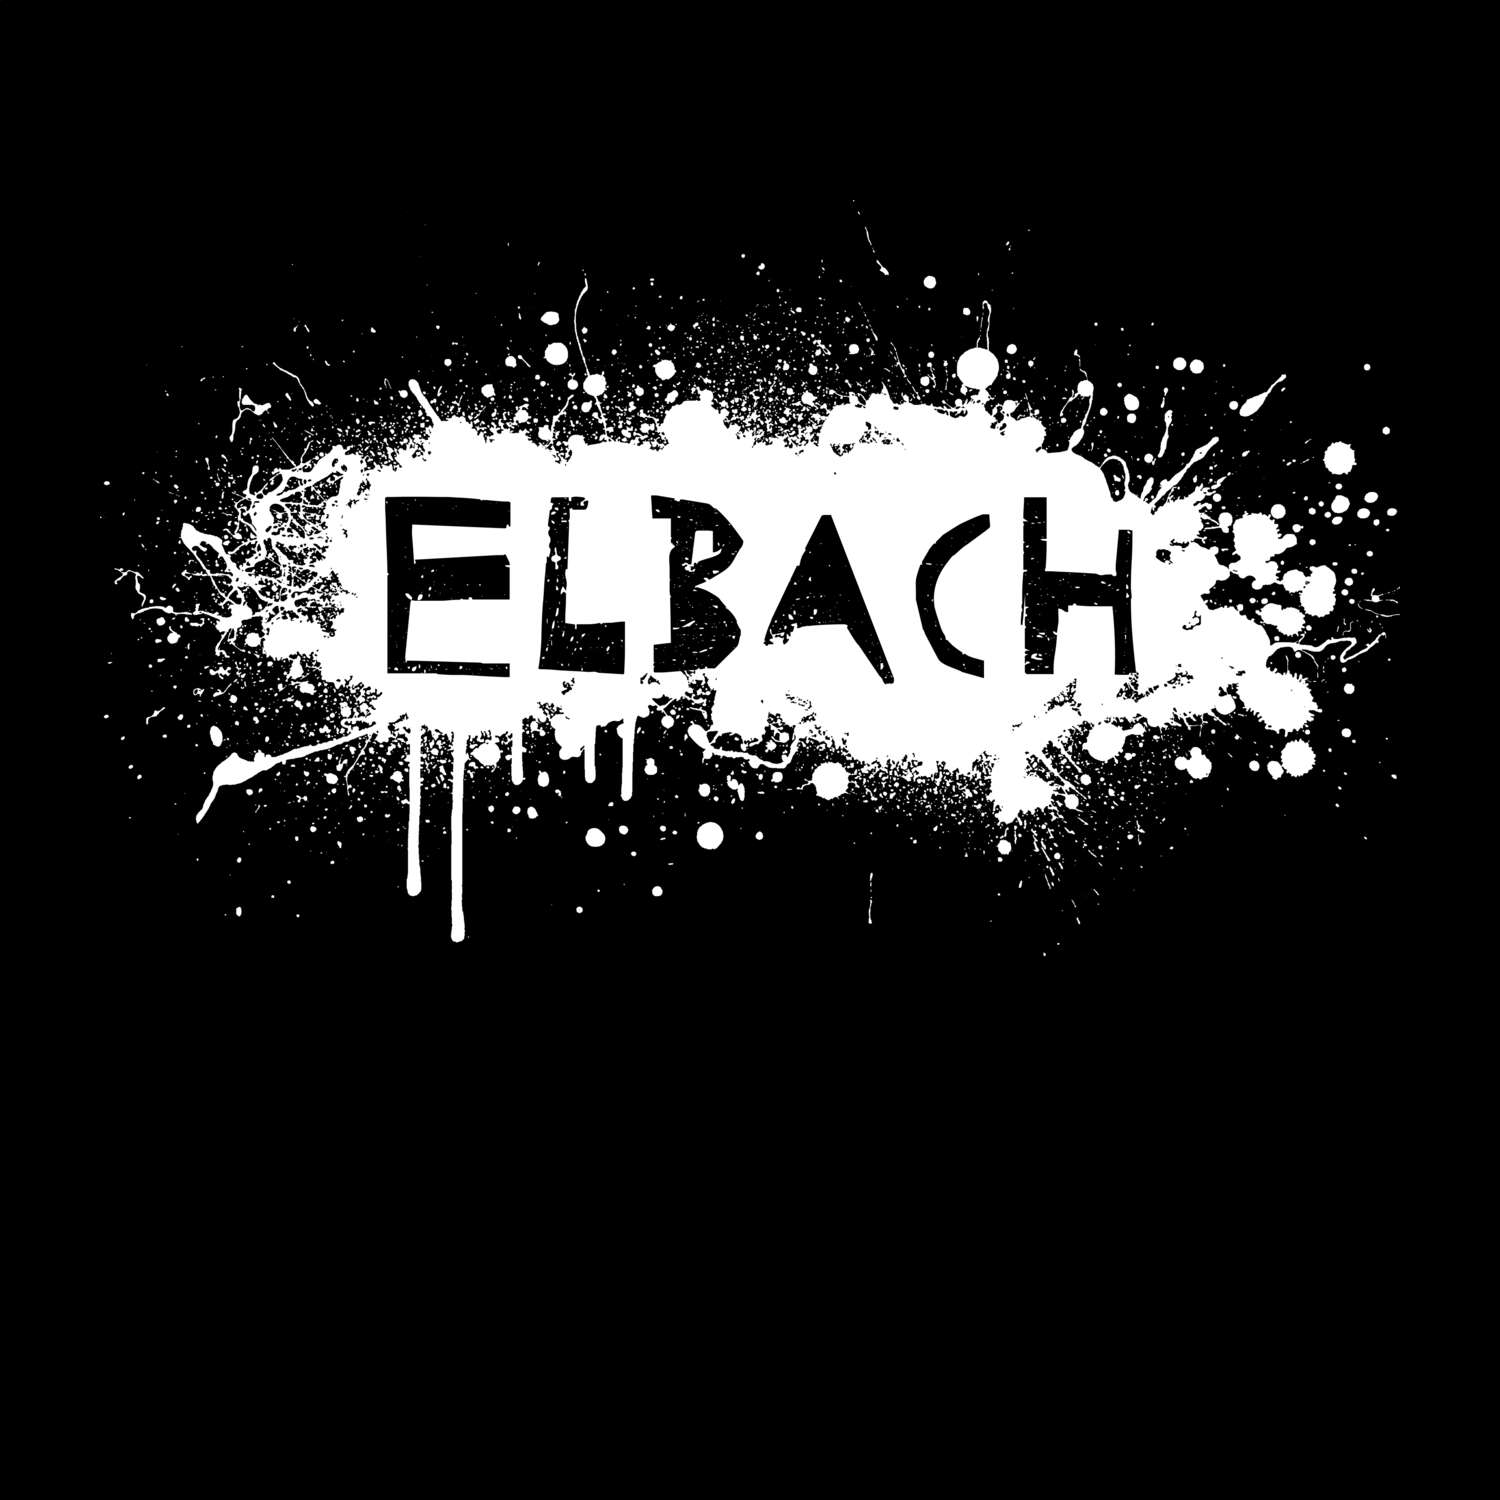 Elbach T-Shirt »Paint Splash Punk«